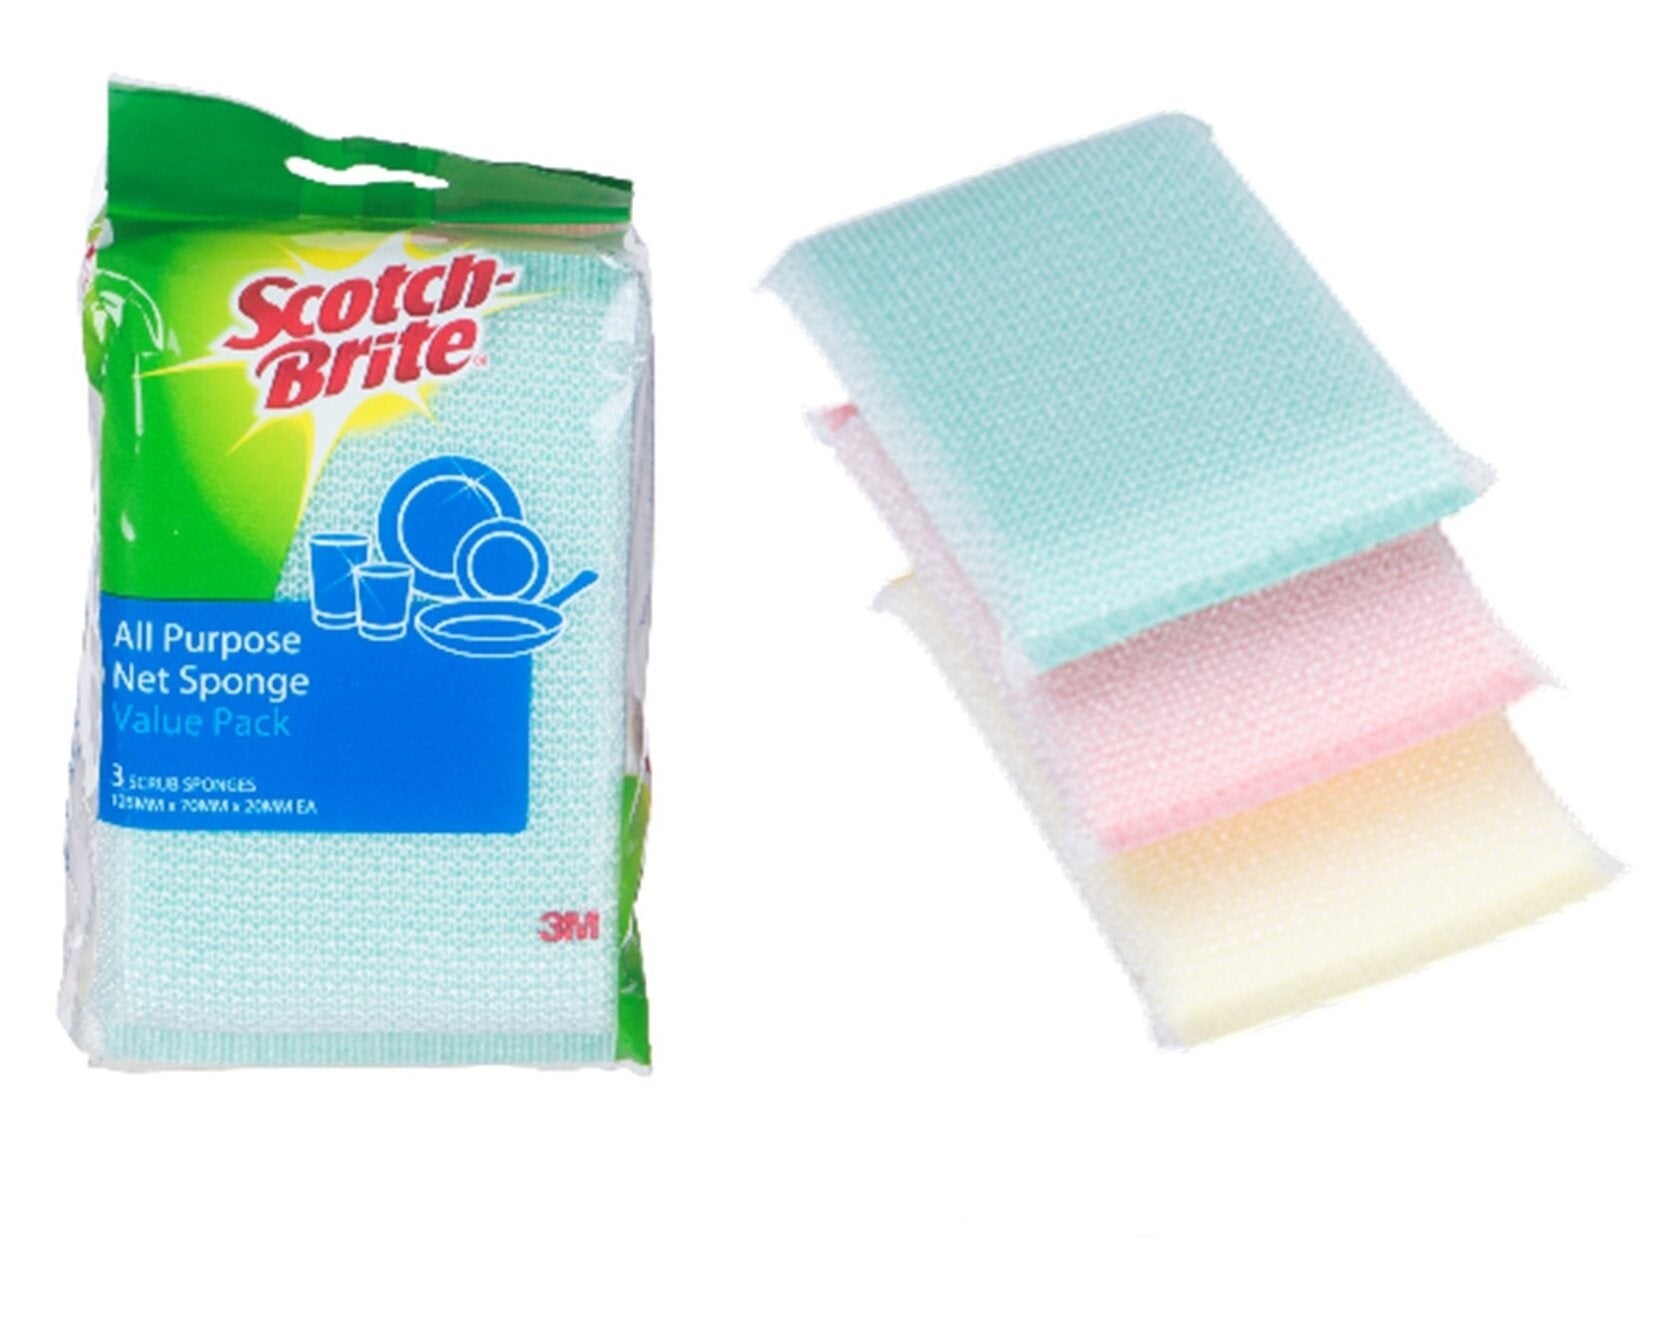 3M Scotch Brite All Purpose Cleaning Net Sponge (3pcs/pack) - OfficePlus